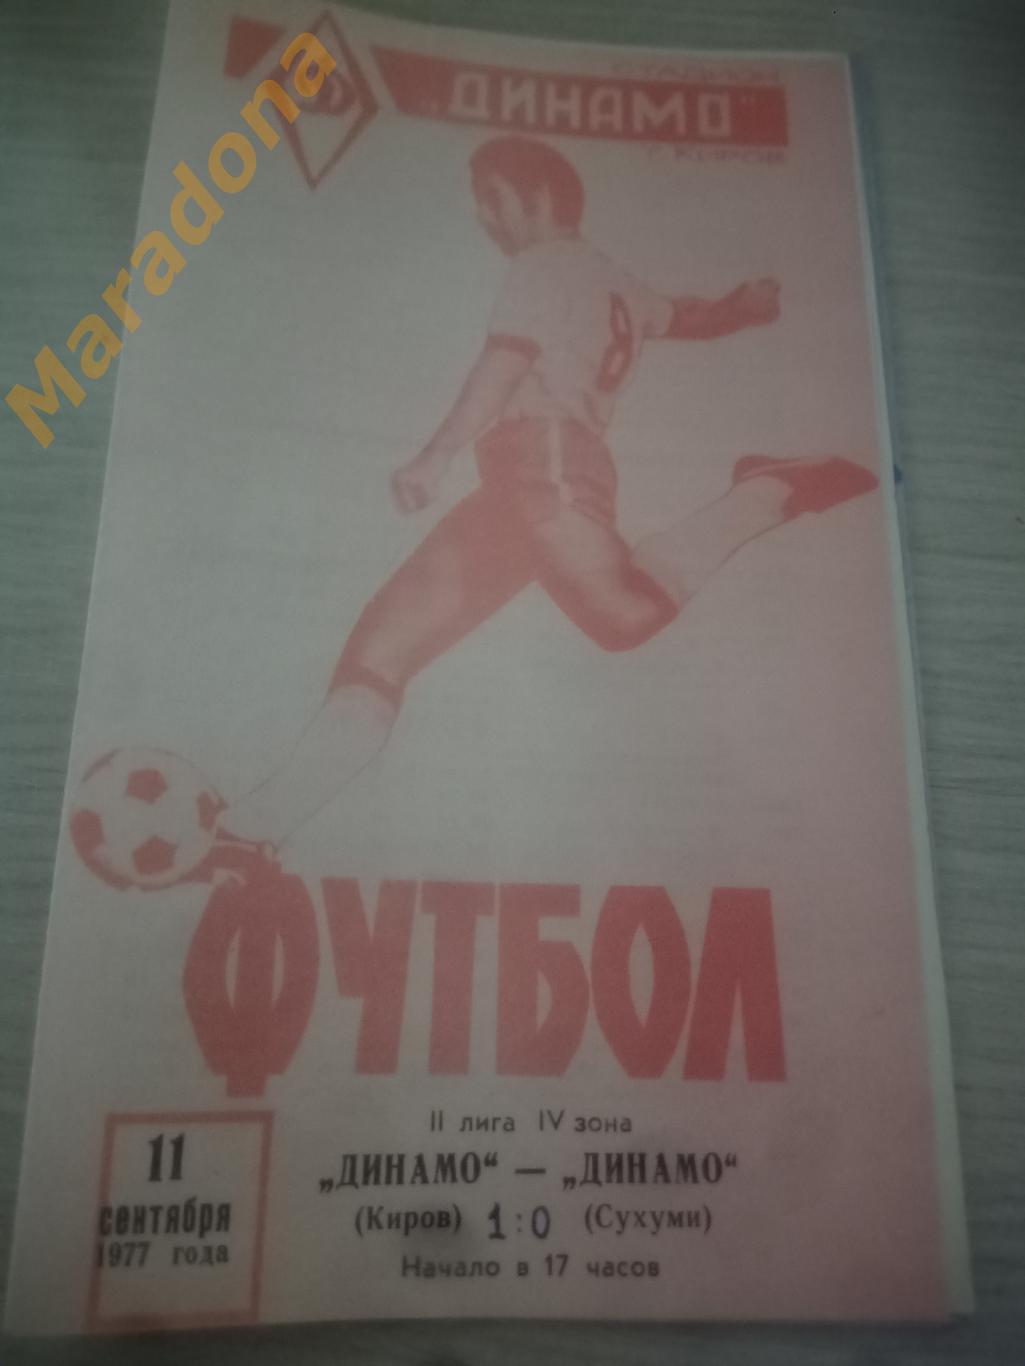 Динамо Киров - Динамо Сухуми 1977